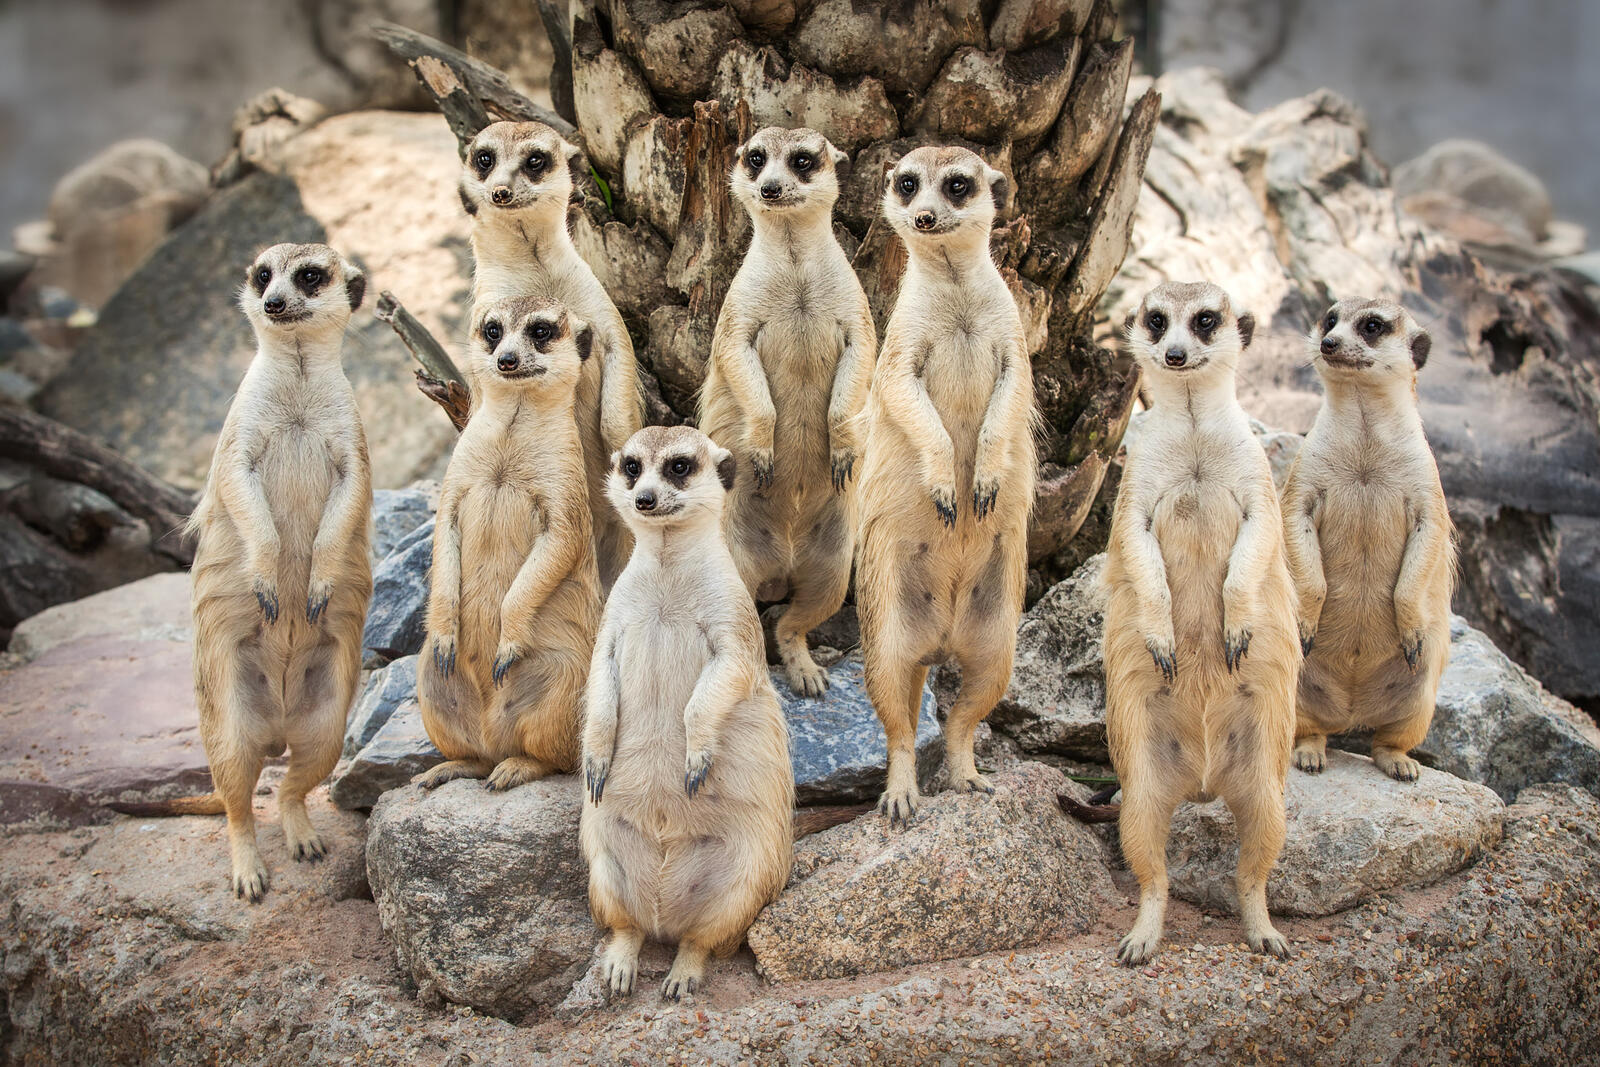 Wallpapers meerkats family animal on the desktop